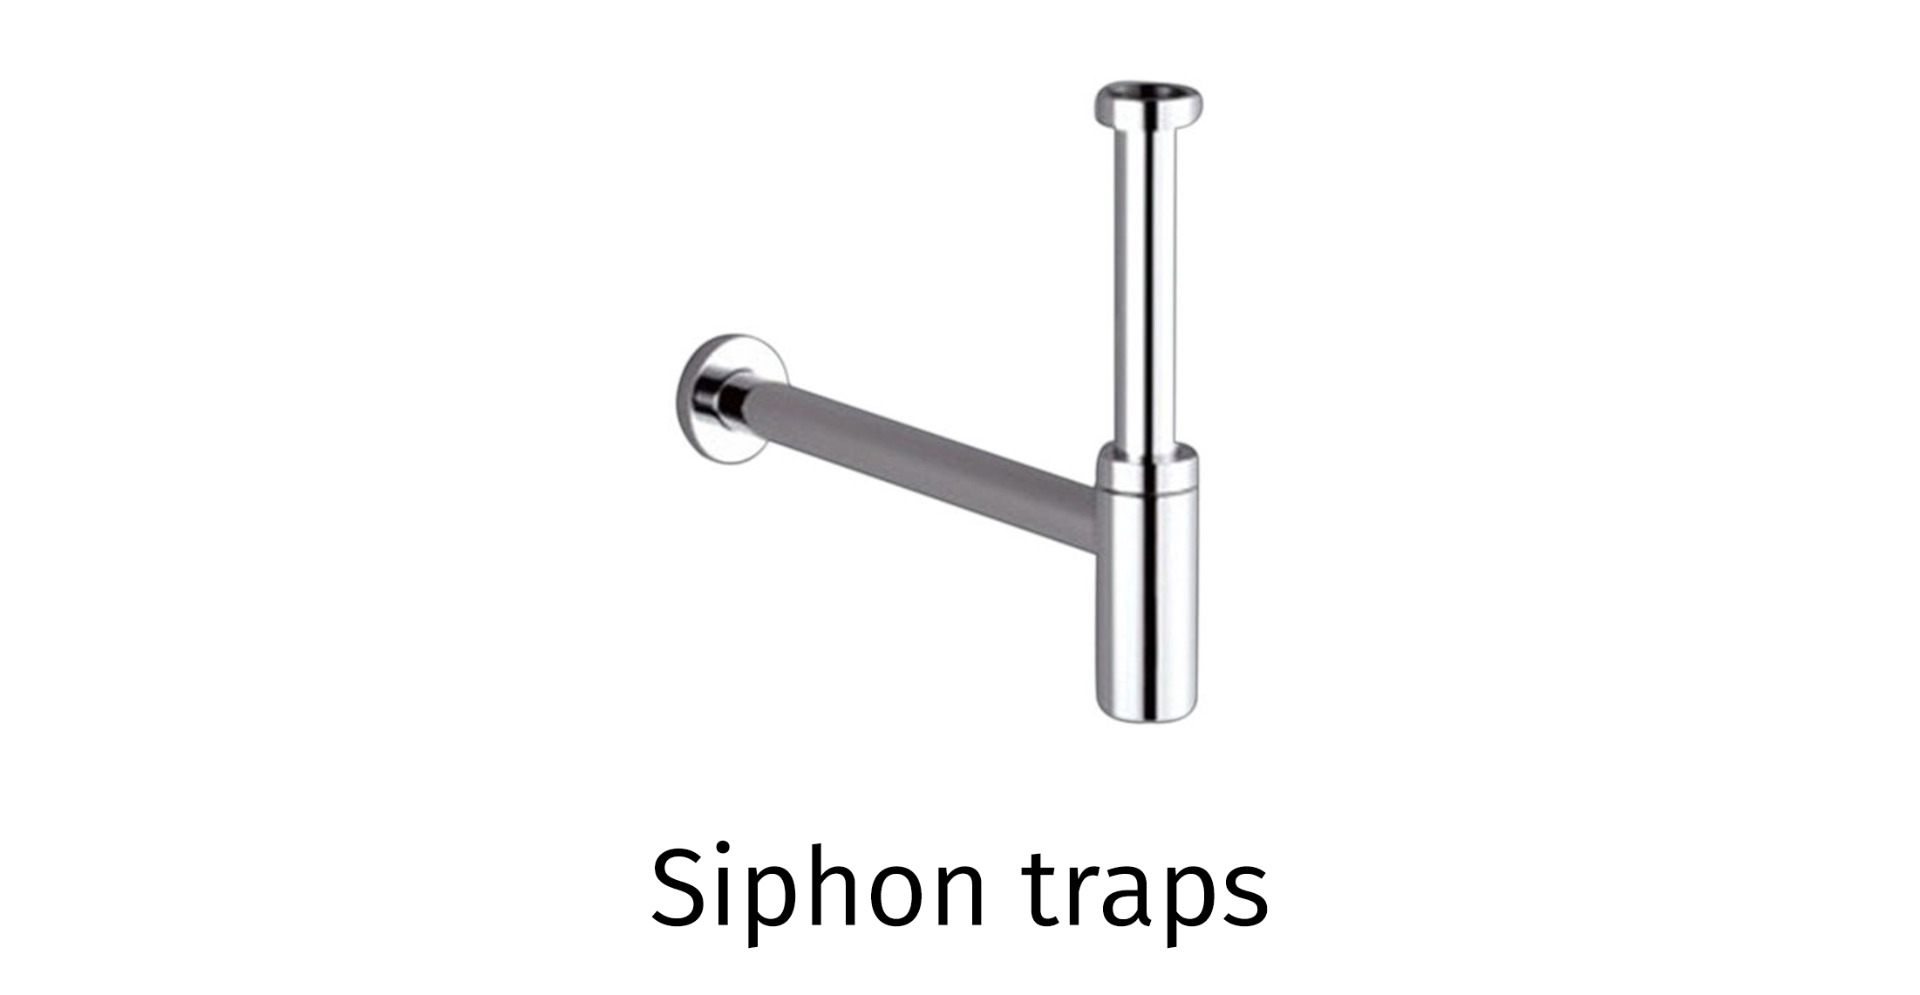 Siphon traps